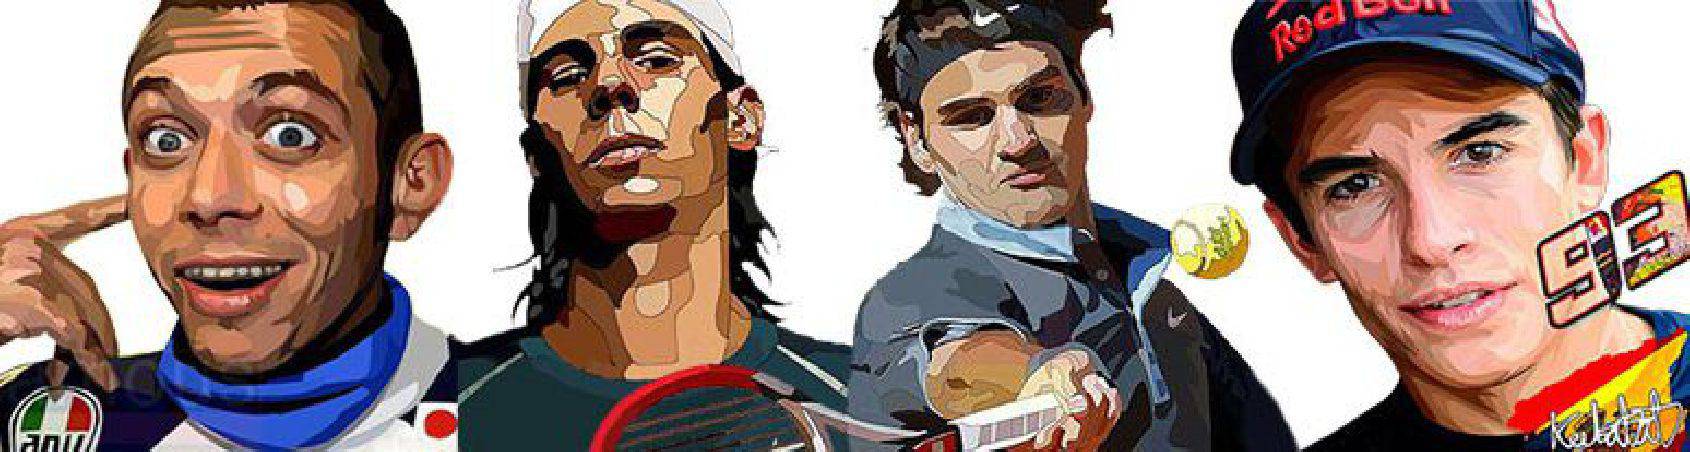 Pop-Art style paintings: Sports: Tennis, F1, Moto GP - to buy